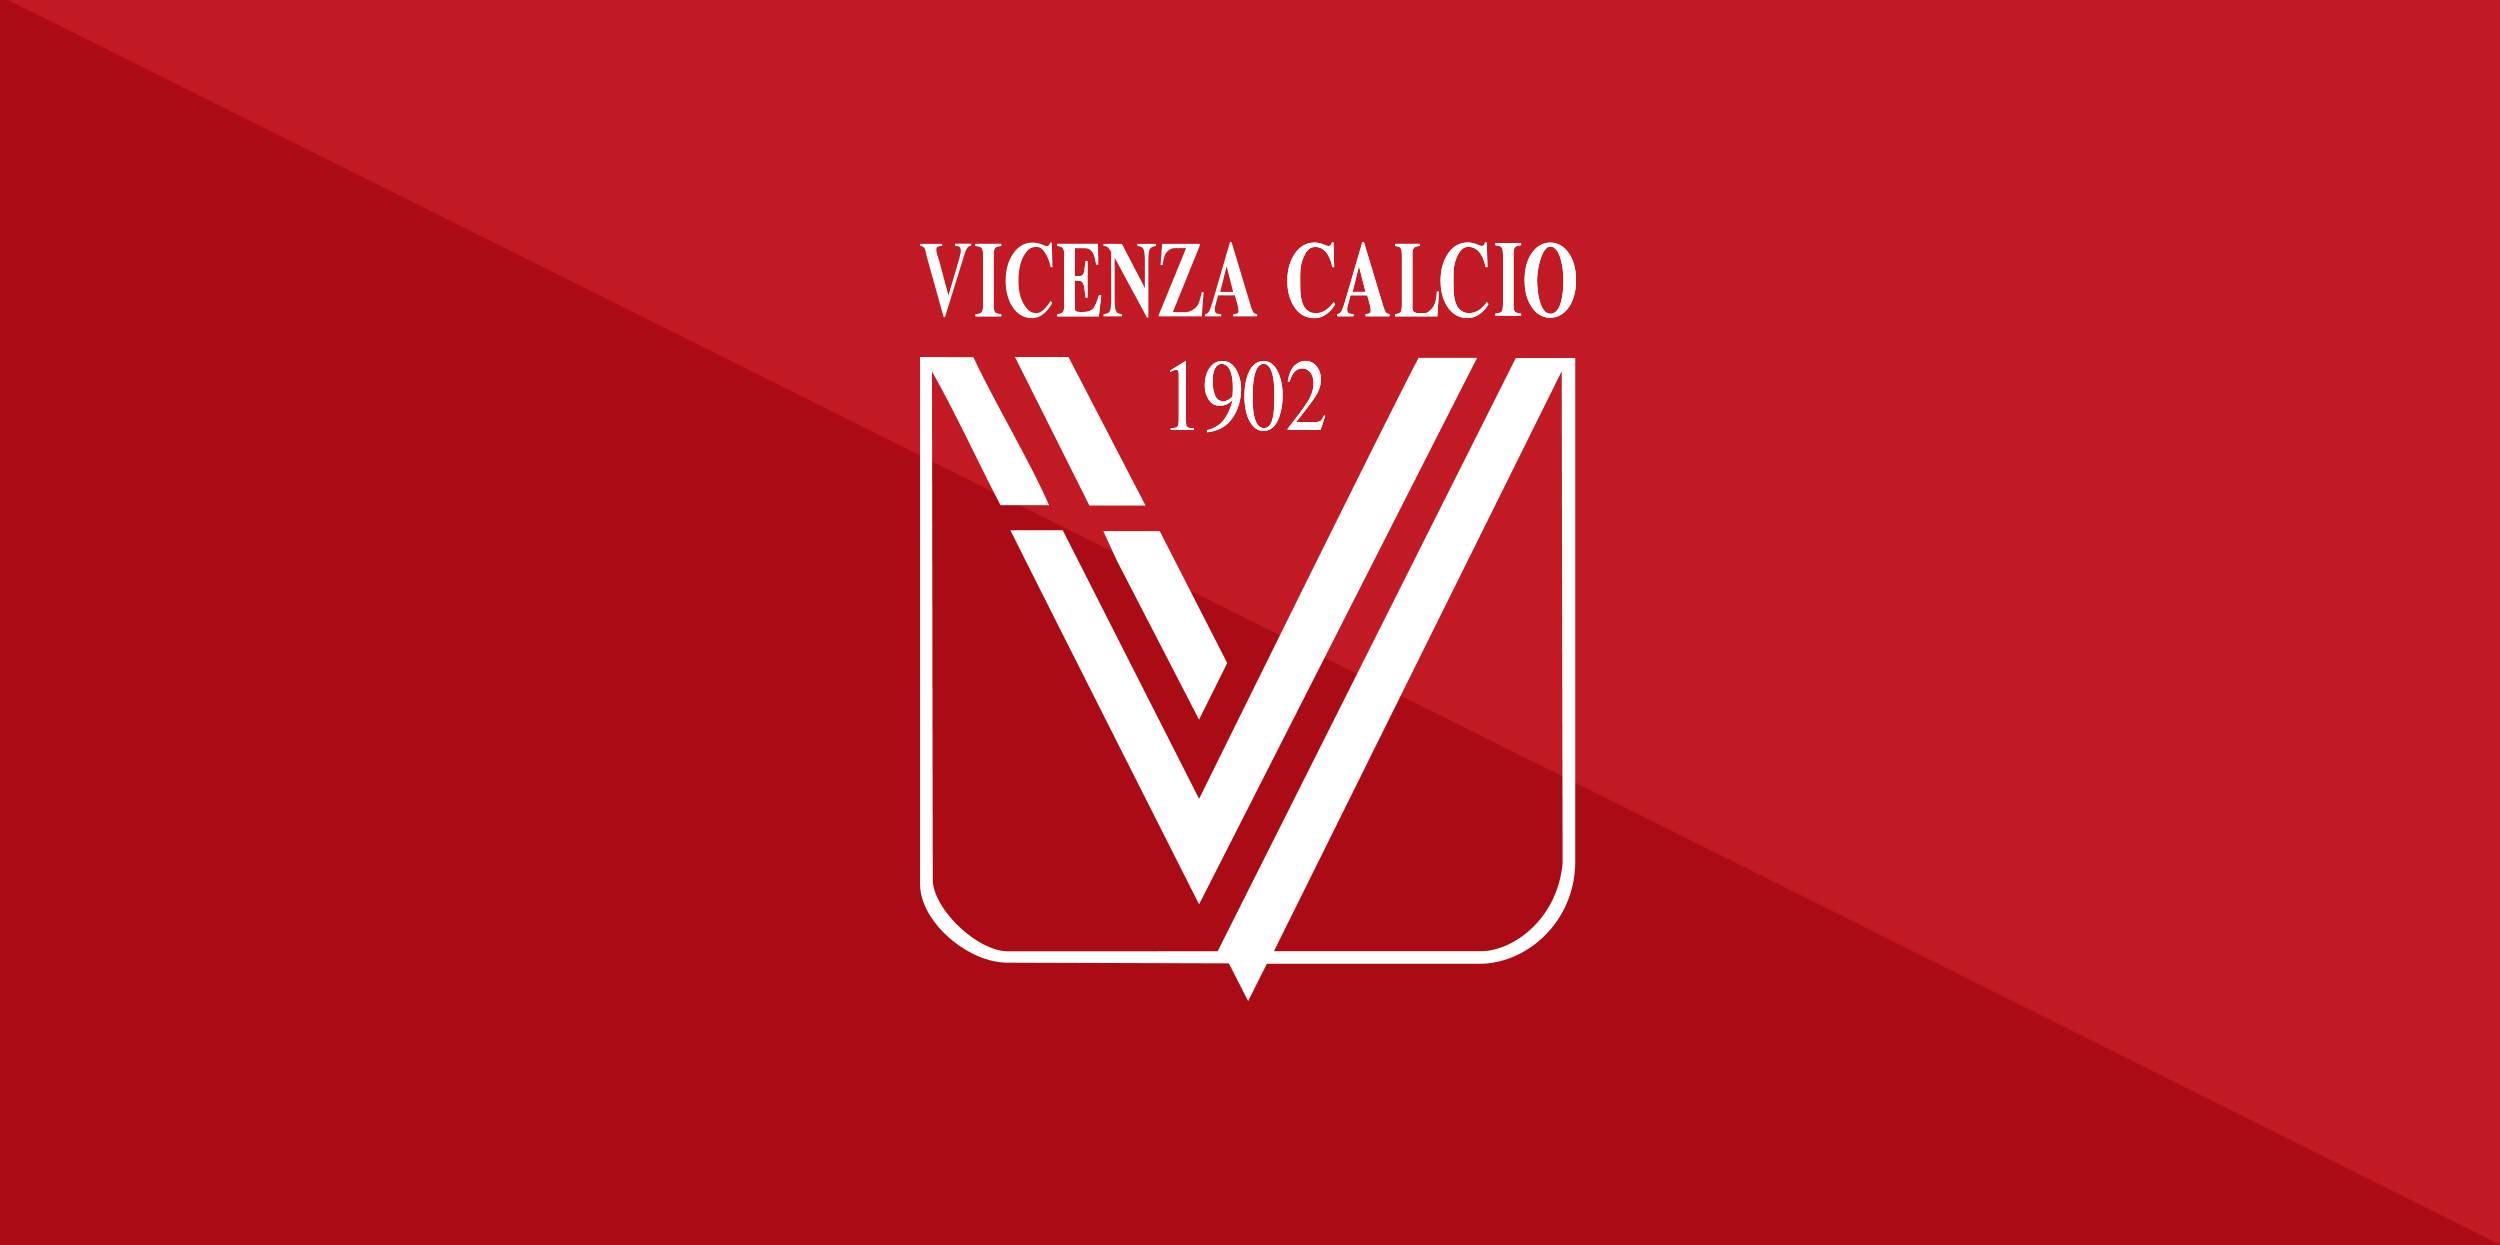 vicenza-calcio-logo.jpg